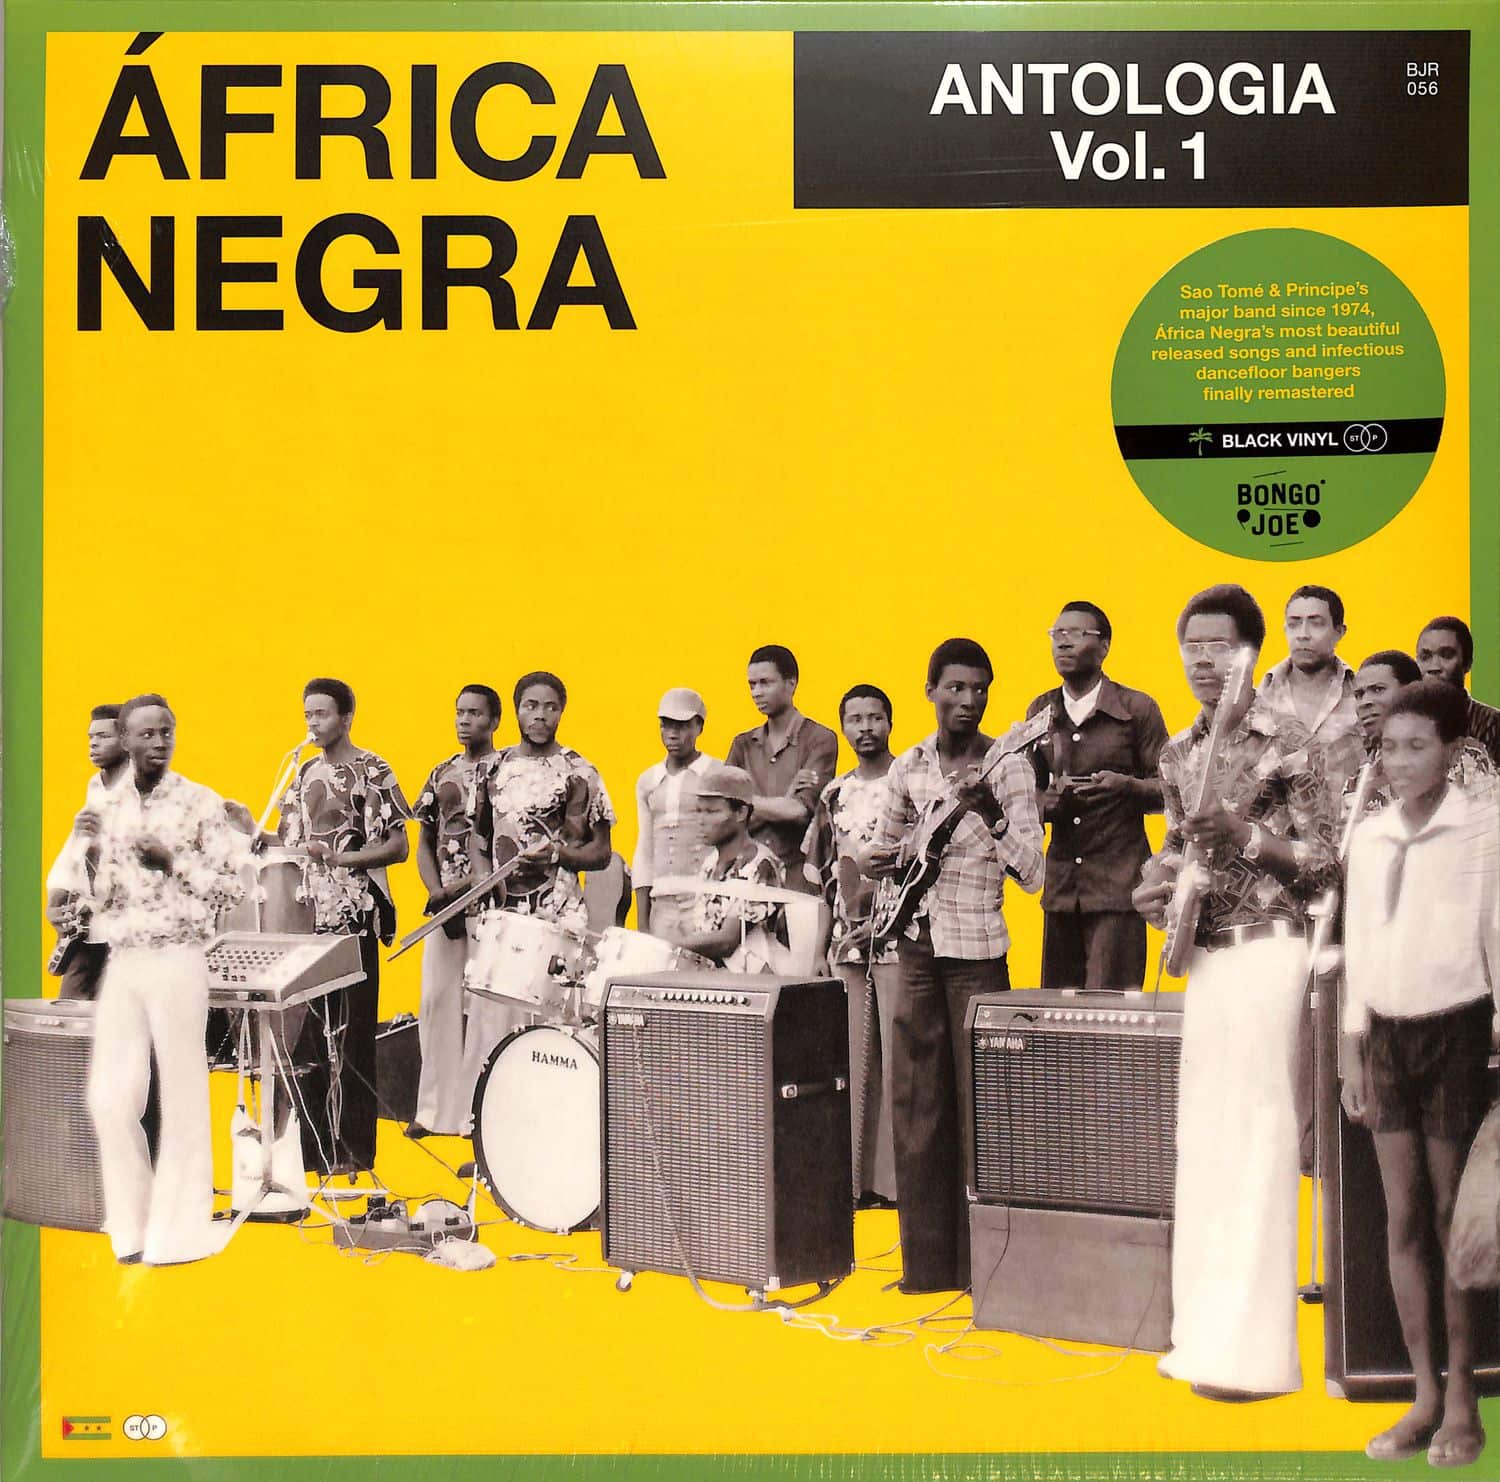 Africa Negra - ANTOLOGIA VOL.1 